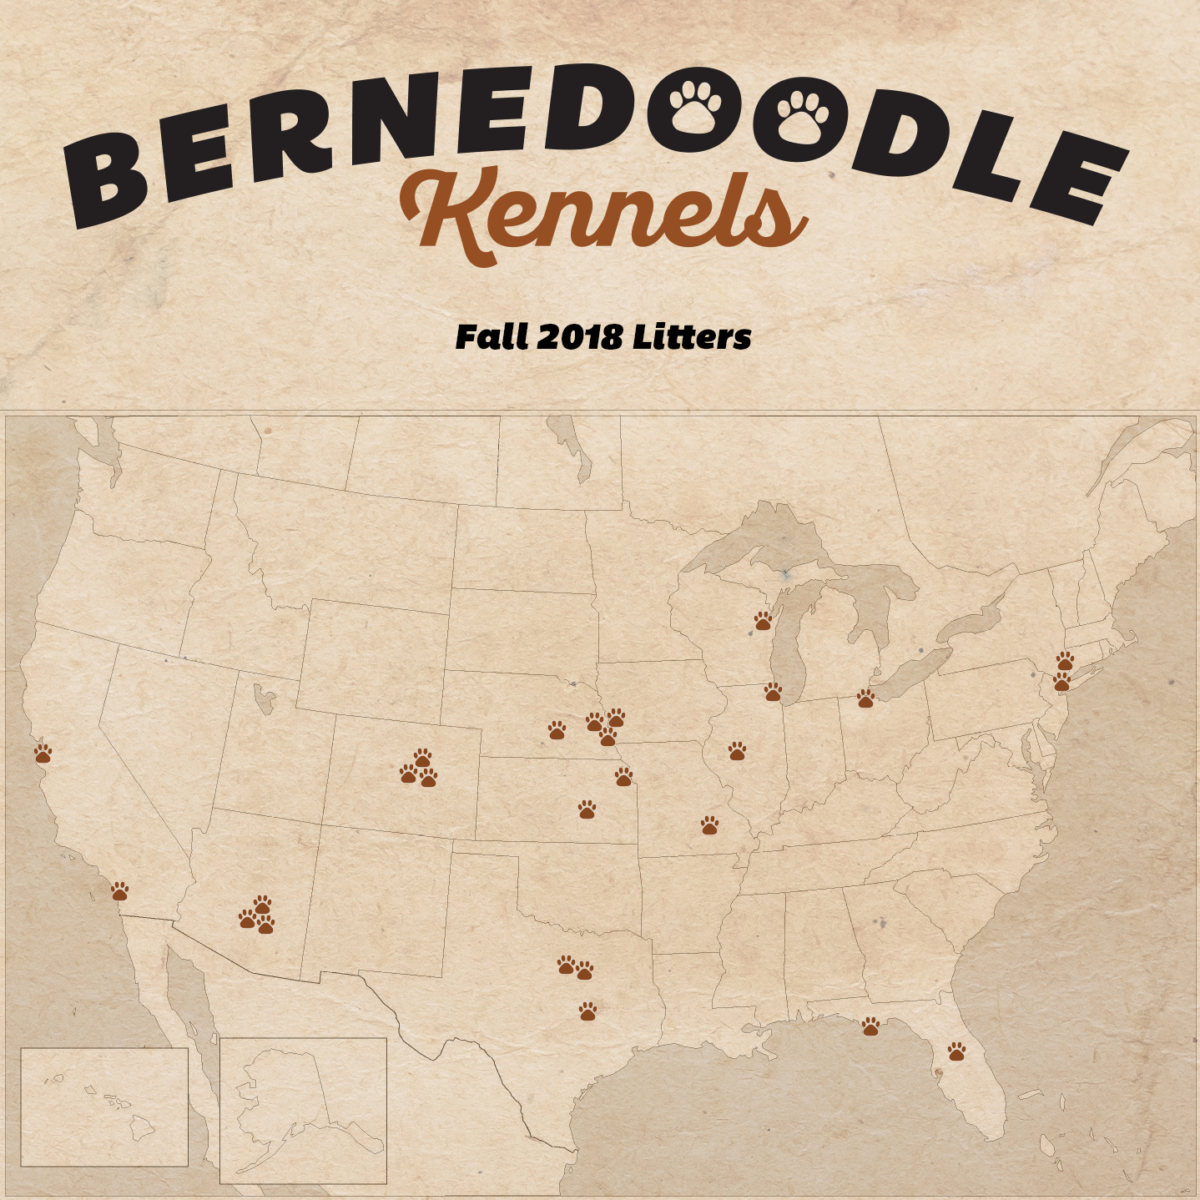 Bernedoodle Kennels - Fall 2018 Litters